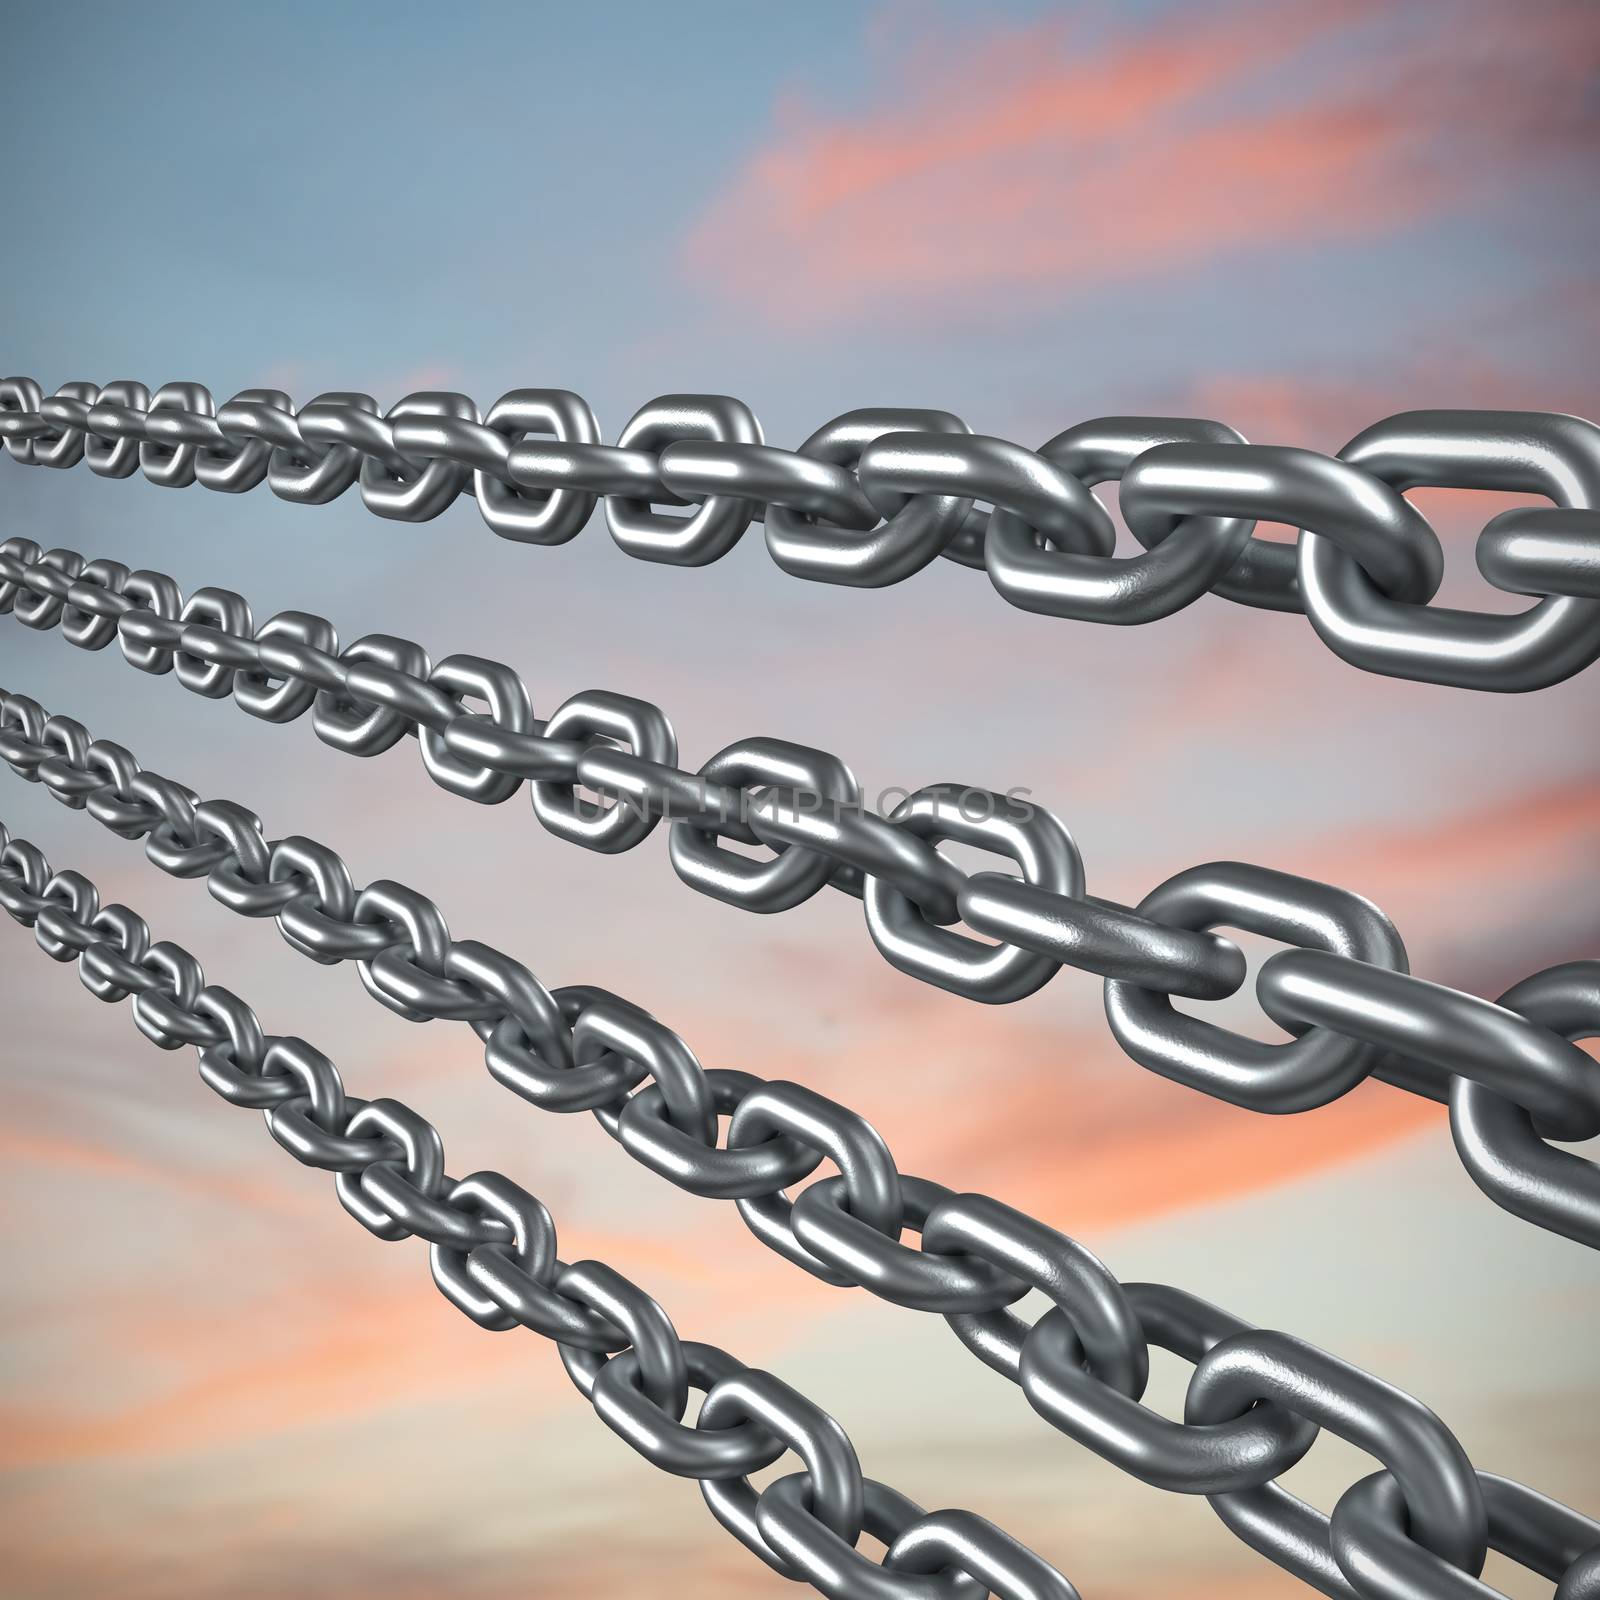 3d image of metal chains  against full frame shot of sky